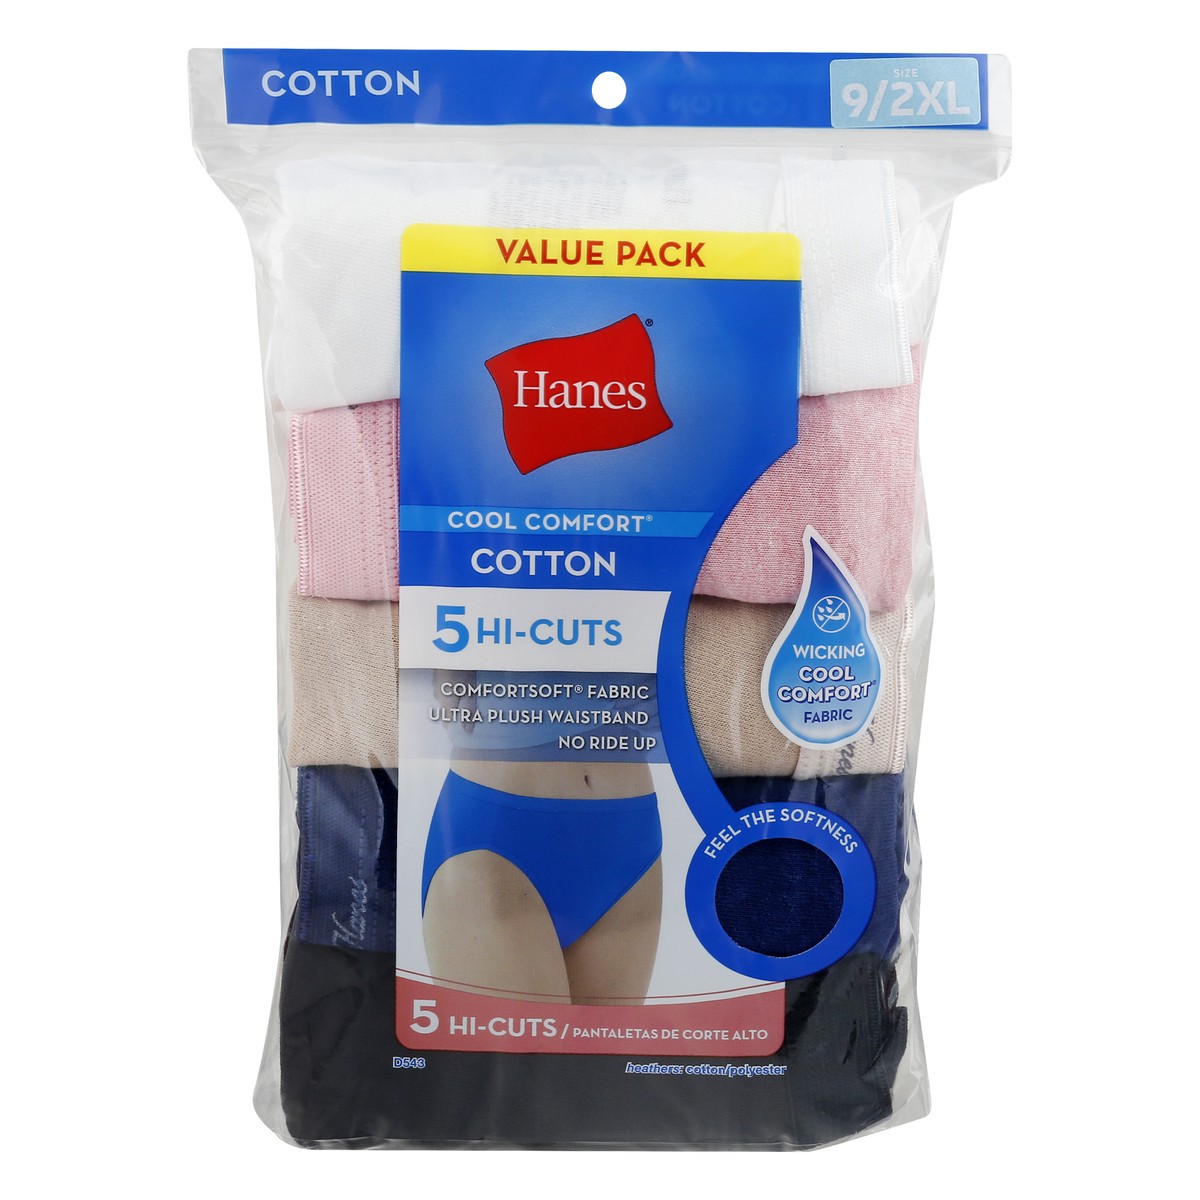 slide 1 of 10, Hanes Cool Comfort Value Pack Size 9/2XL Cotton Hi-Cuts 5 ea, 5 ct